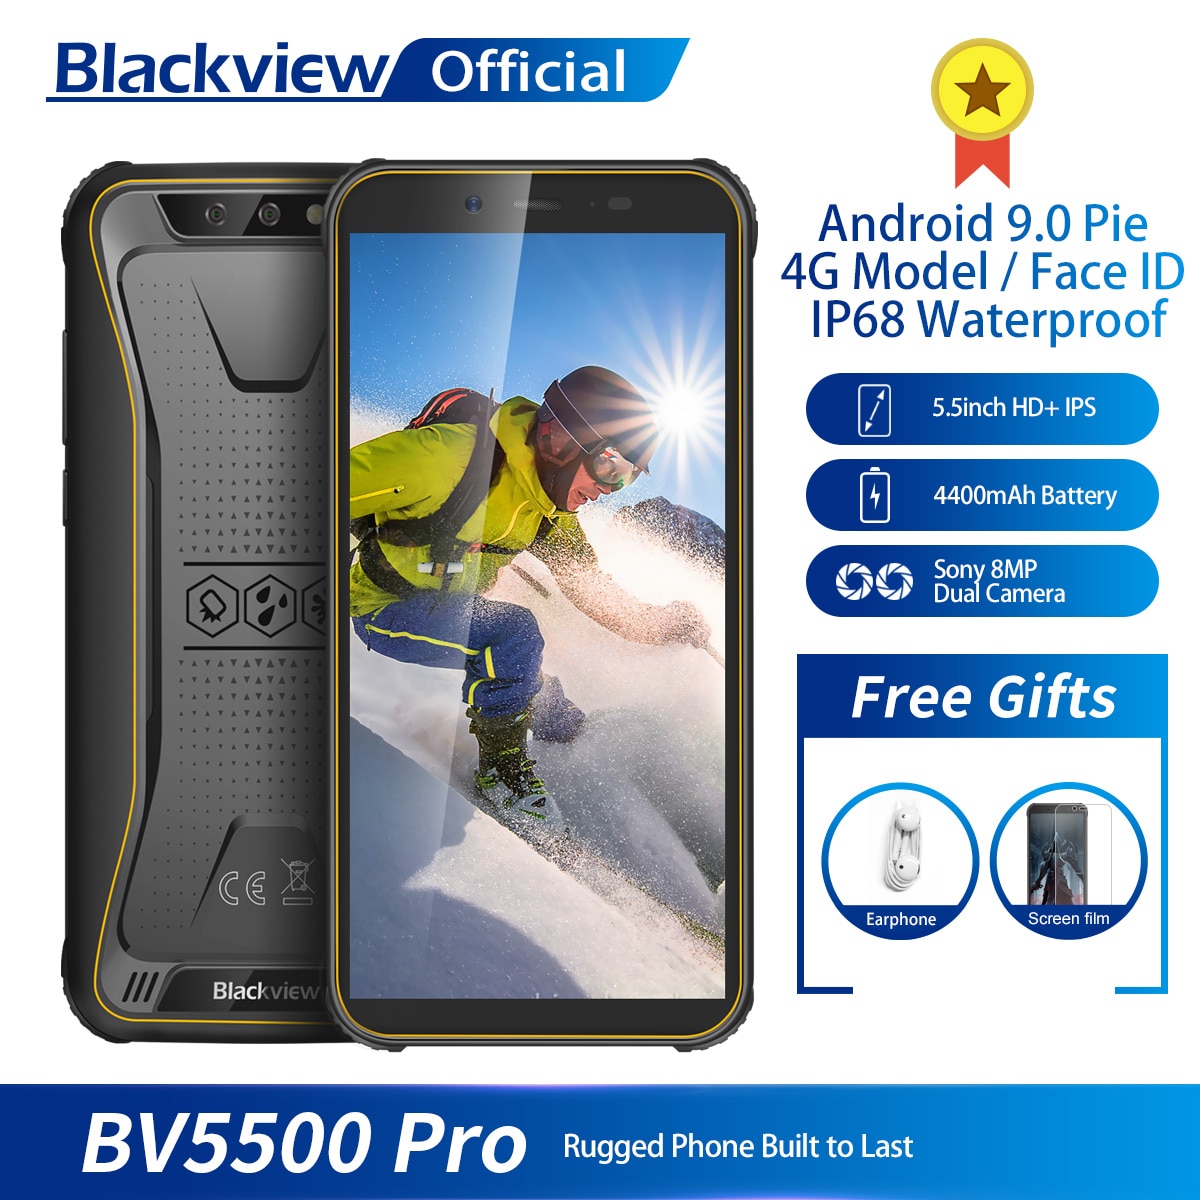 Blackview BV5500 pro IP68 Waterproof 4G Mobile Phone 3GB+16GB 5.5" Screen 4400mAh Android 9.0 Pie Dual SIM Rugged Smartphone